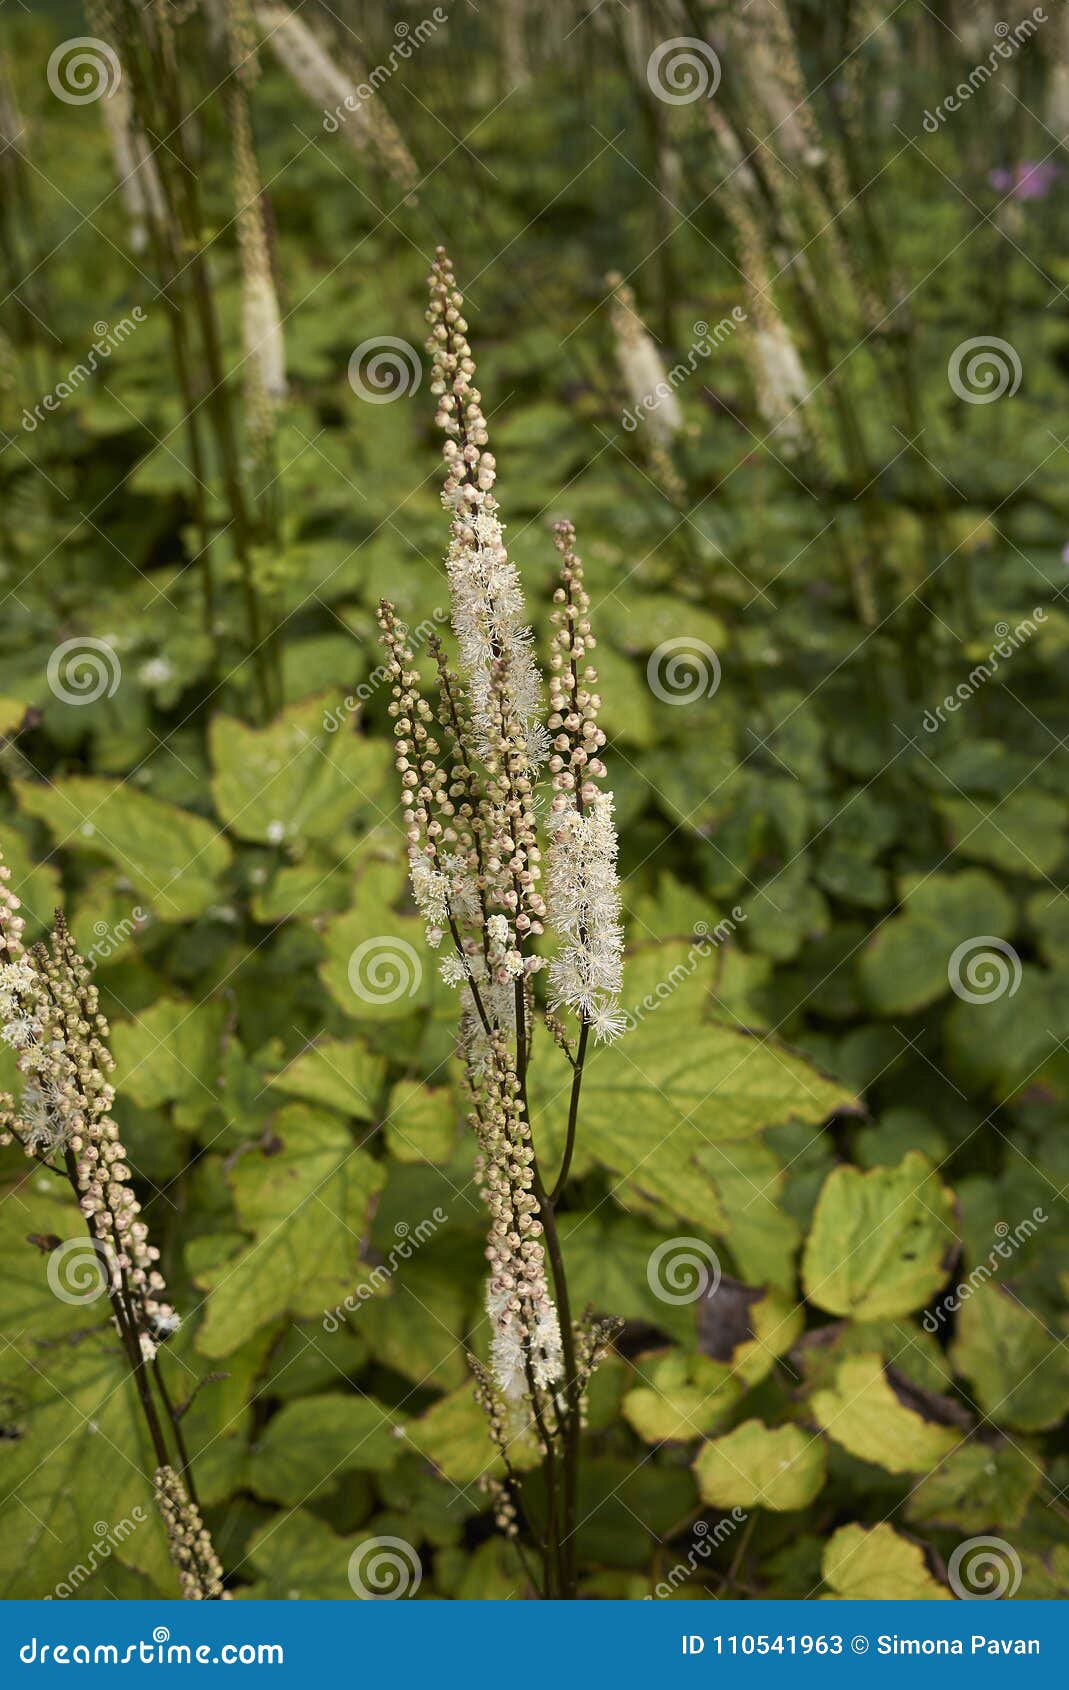 actaea racemosa var. cordifolia